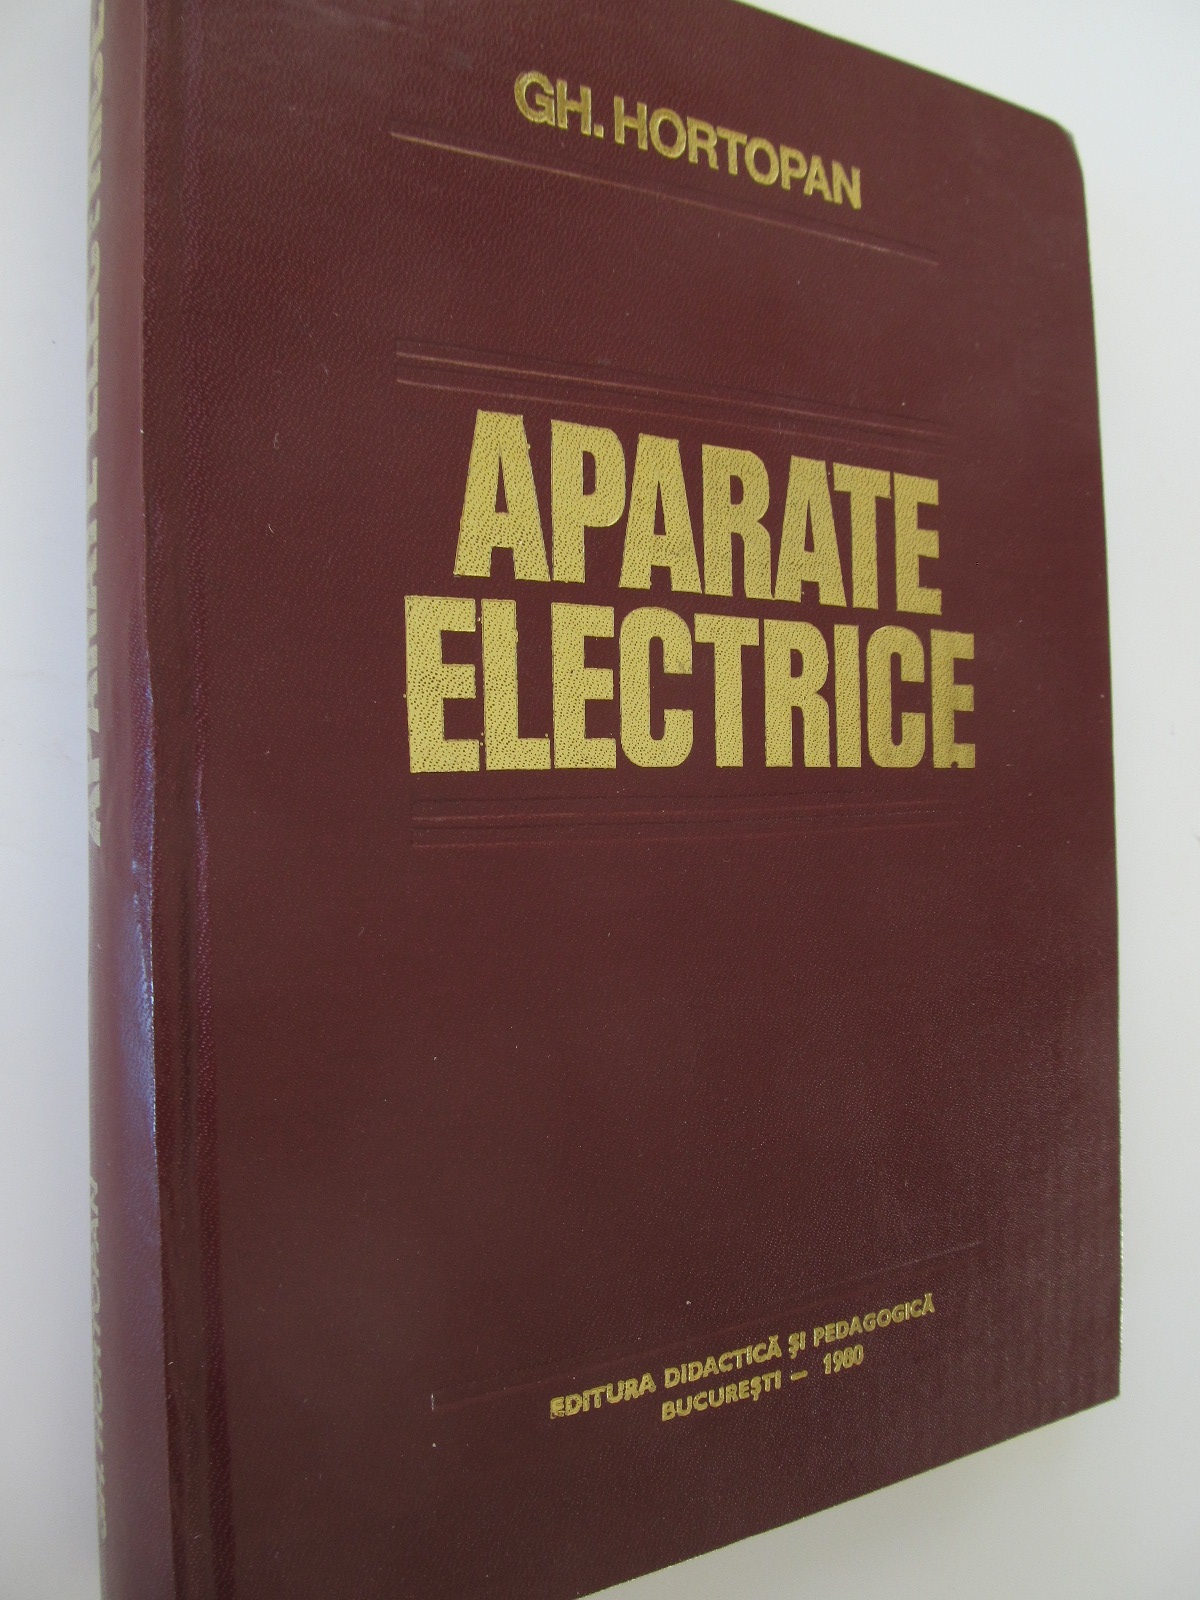 Aparate electrice - Gh. Hortopan | Detalii carte